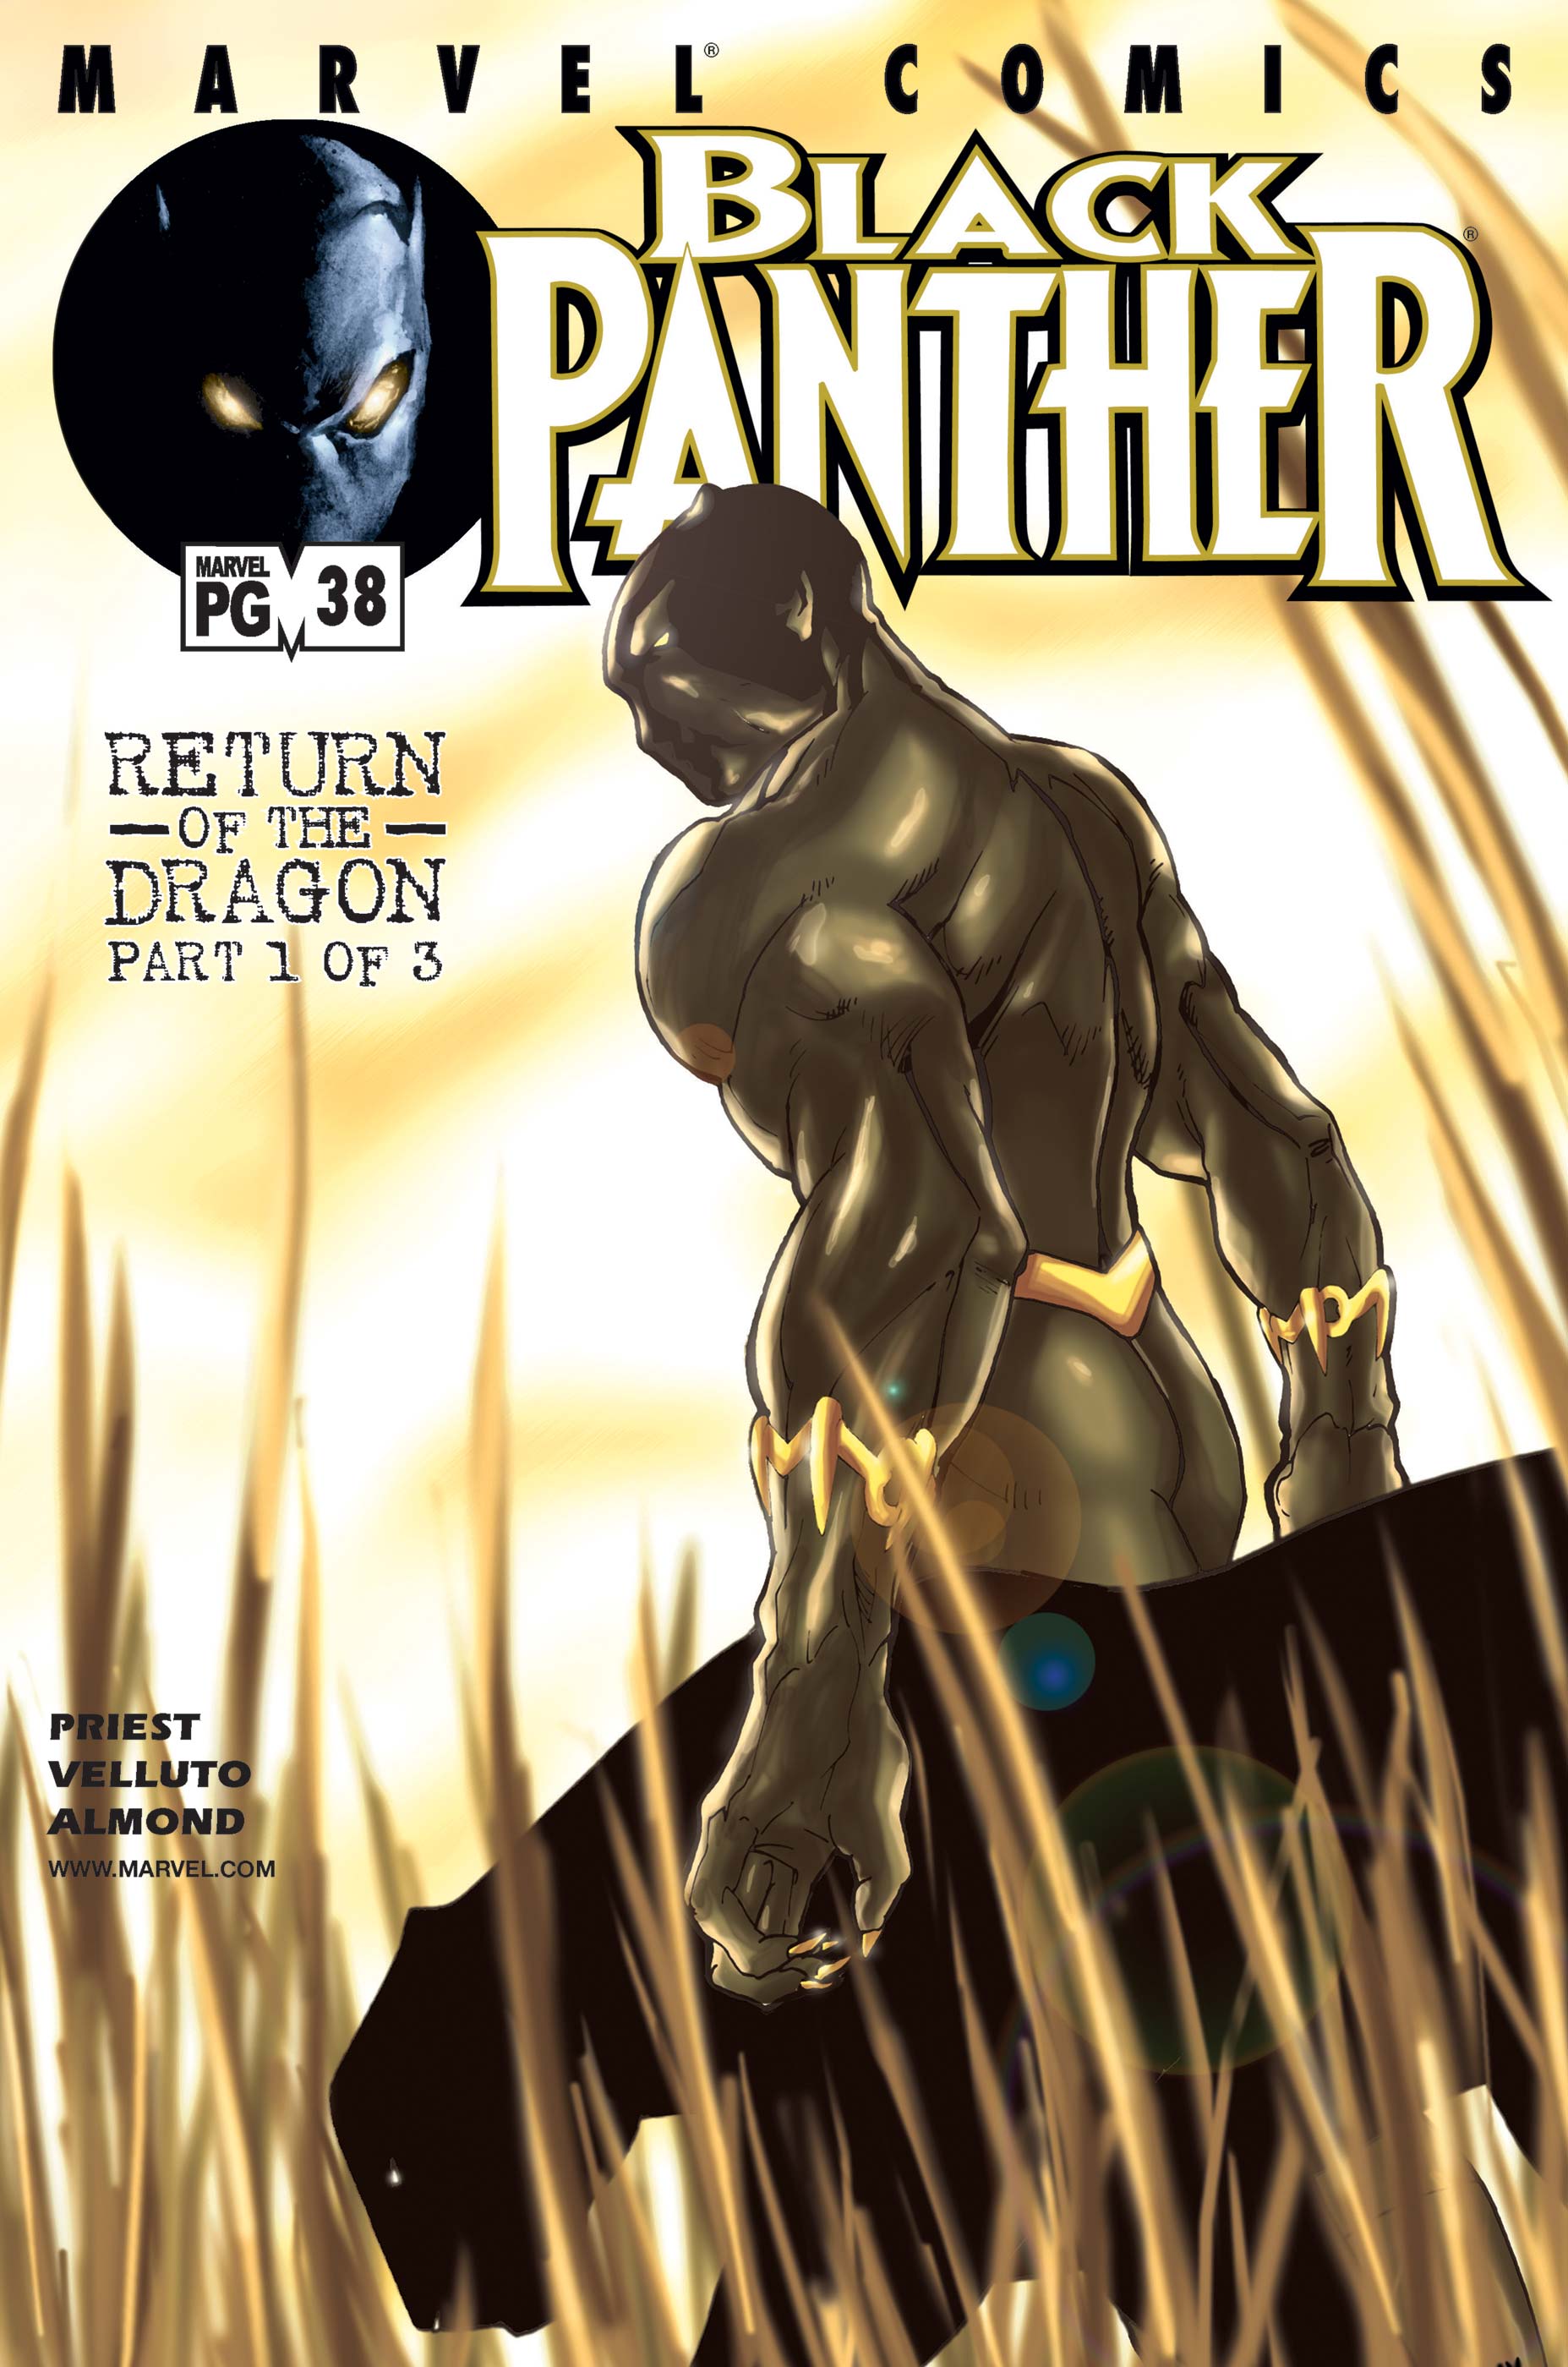 BLACK PANTHER #38#39#40 - MARVEL COMICS (2002)